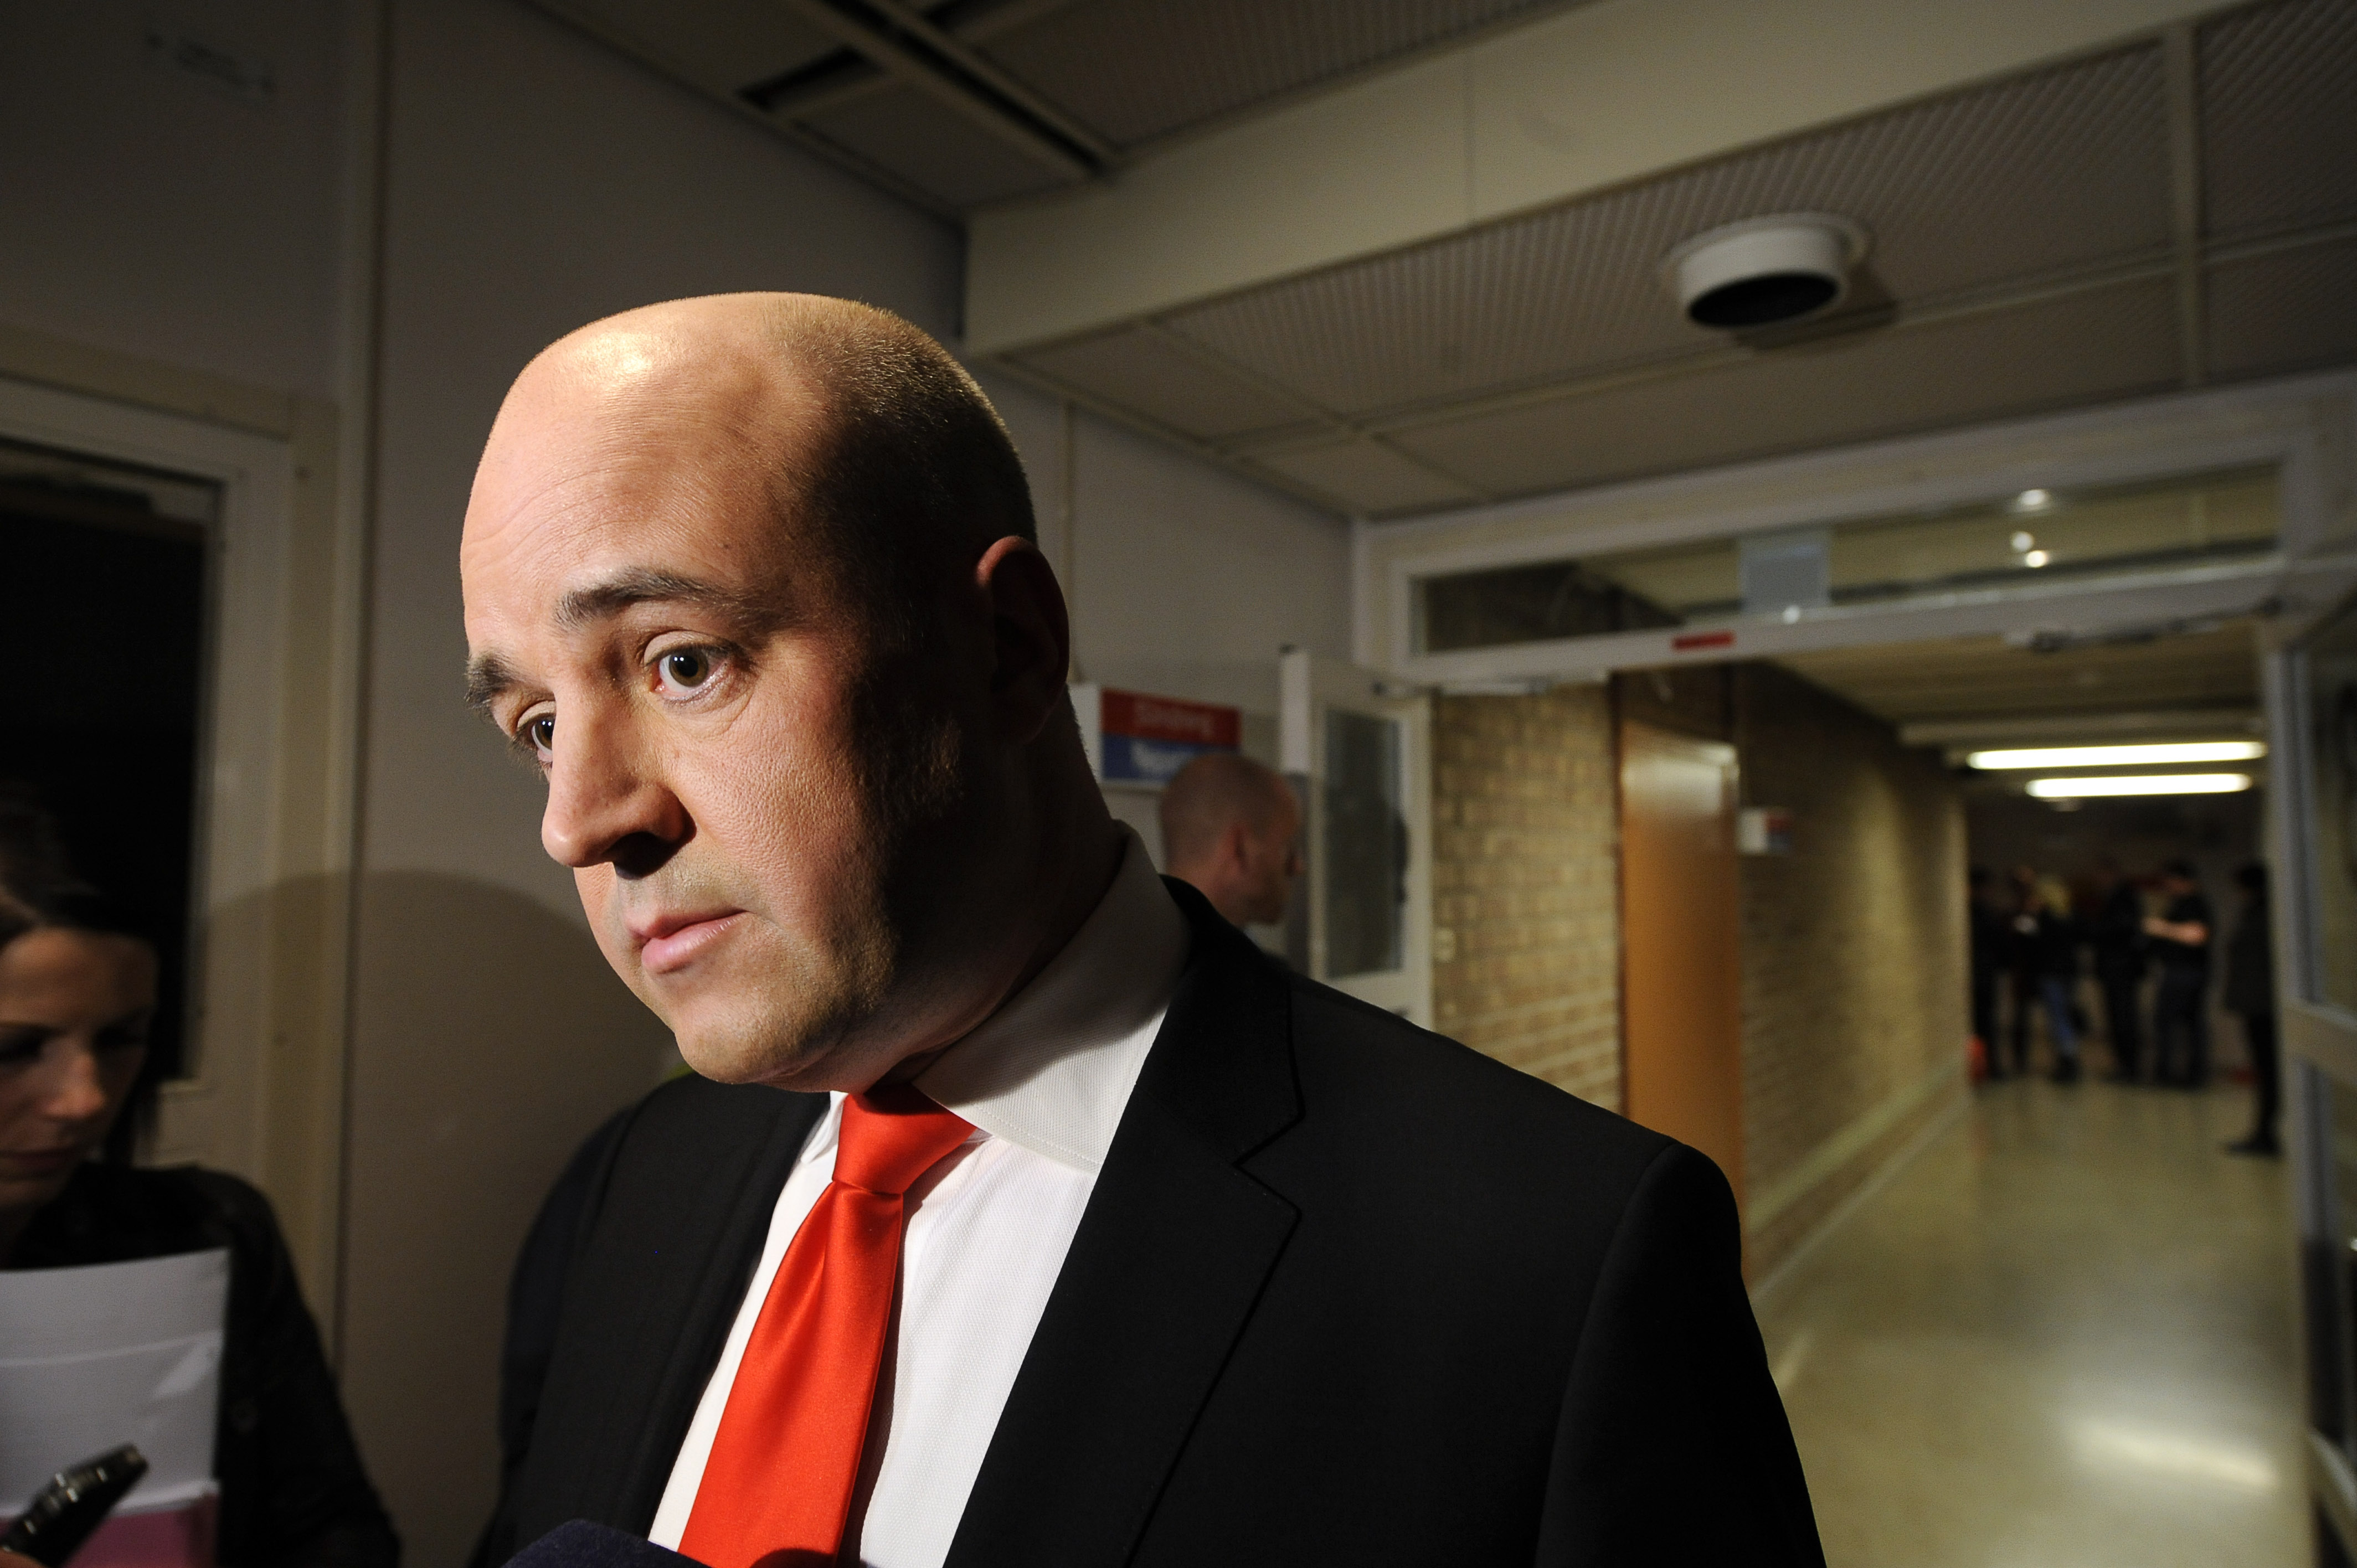 Riksdagsvalet 2010, Fredrik Reinfeldt, Bostäder, Regeringen, Ungdomsarbetslöshet, Jobb, Hyresrätt, Bostadsbrist, Alliansen